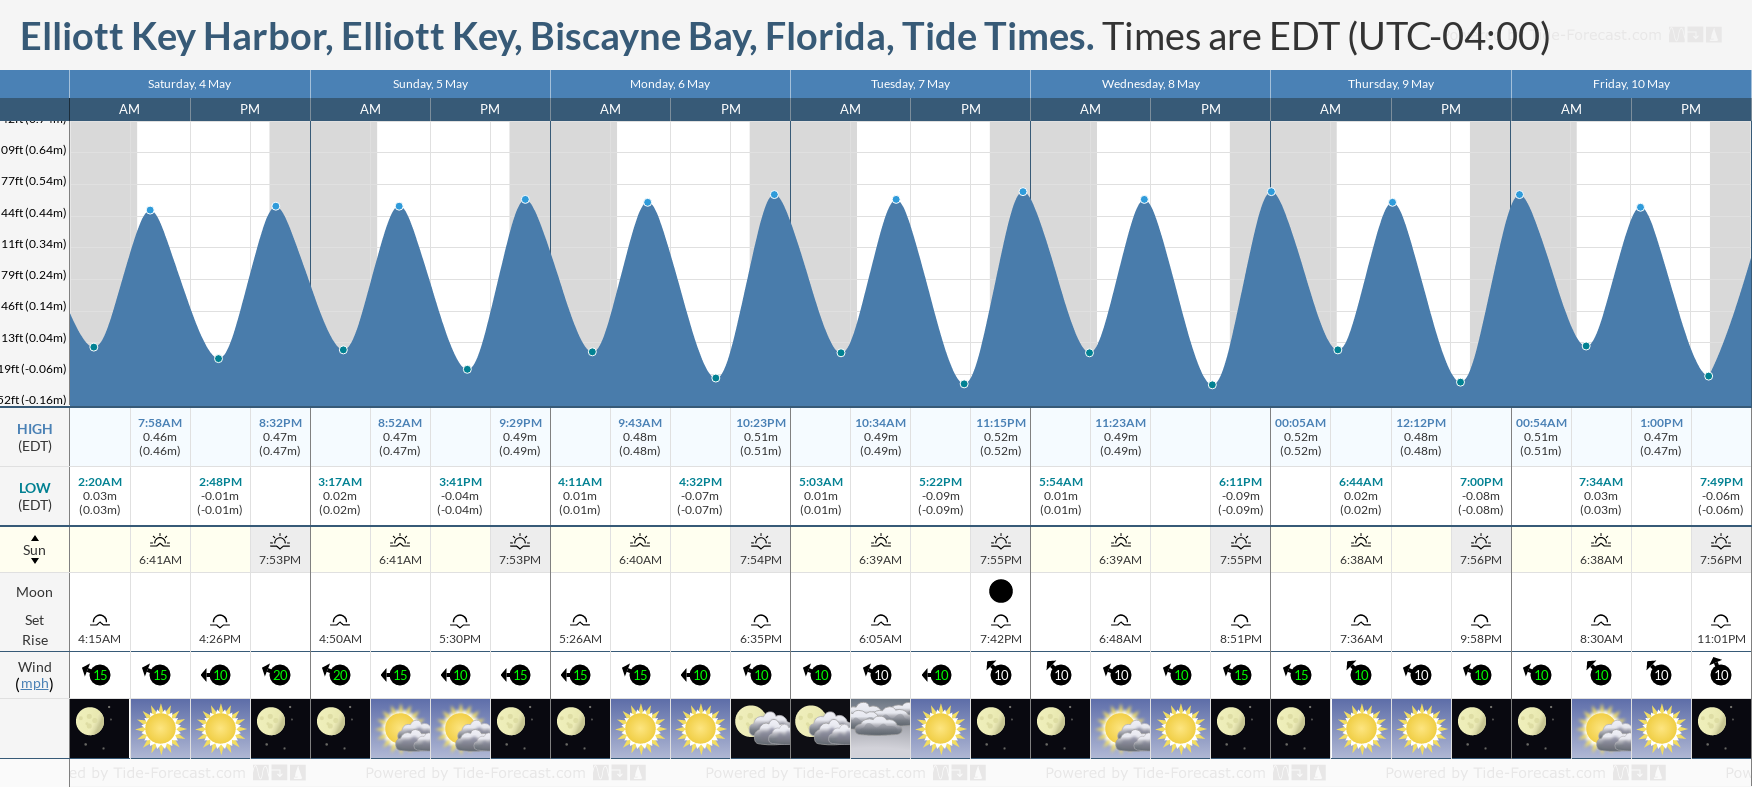 Elliott Key Harbor, Elliott Key, Biscayne Bay, Florida Tide Chart including high and low tide tide times for the next 7 days